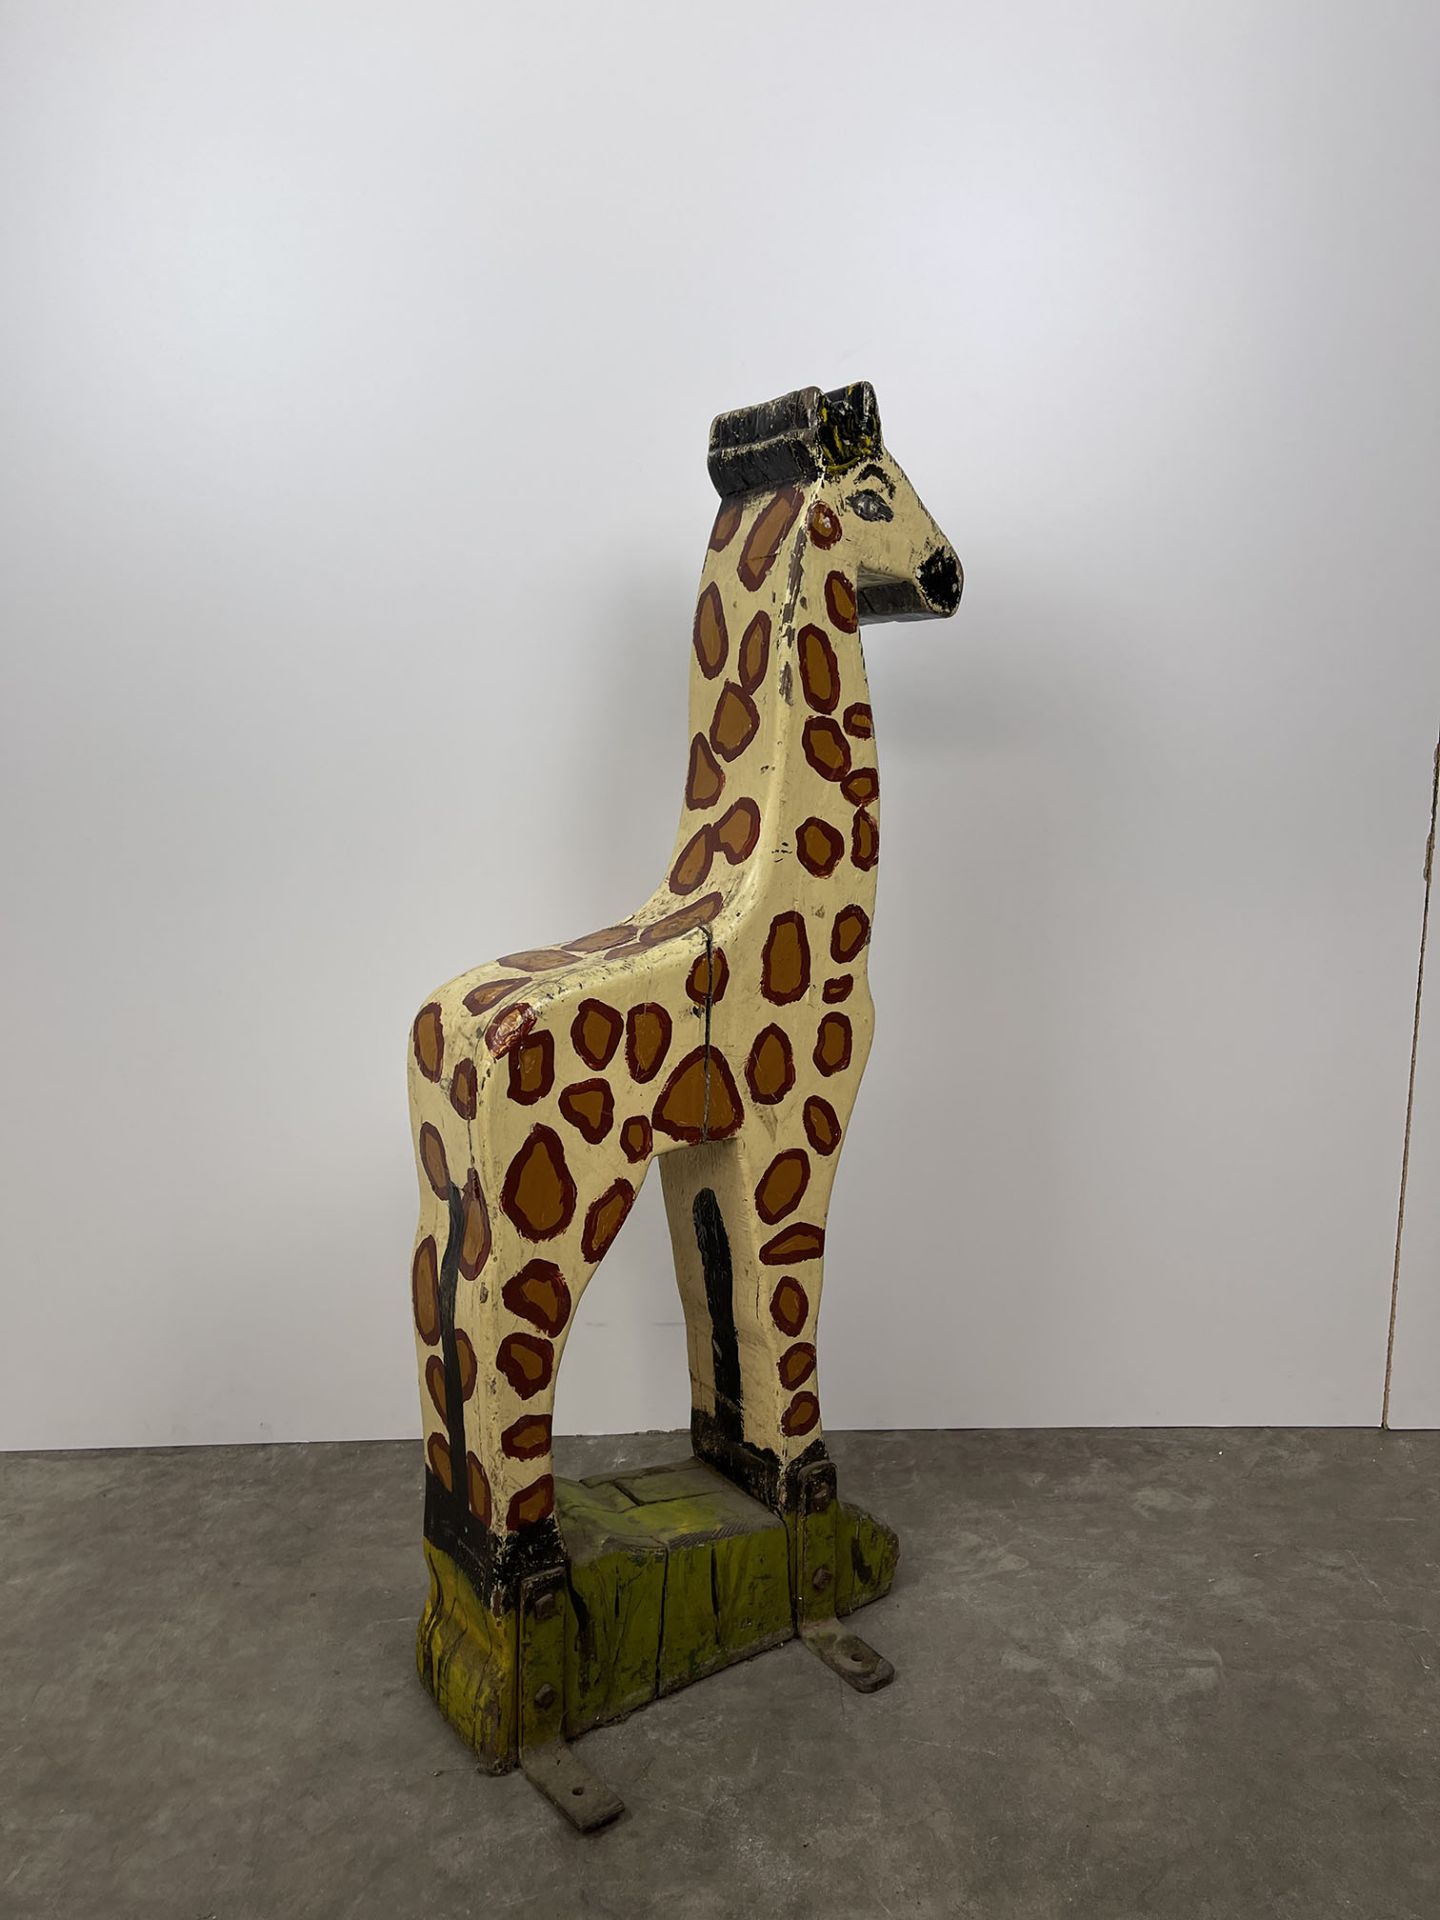 Antique Children's Giraffe Caroulsel Ride - Image 5 of 8